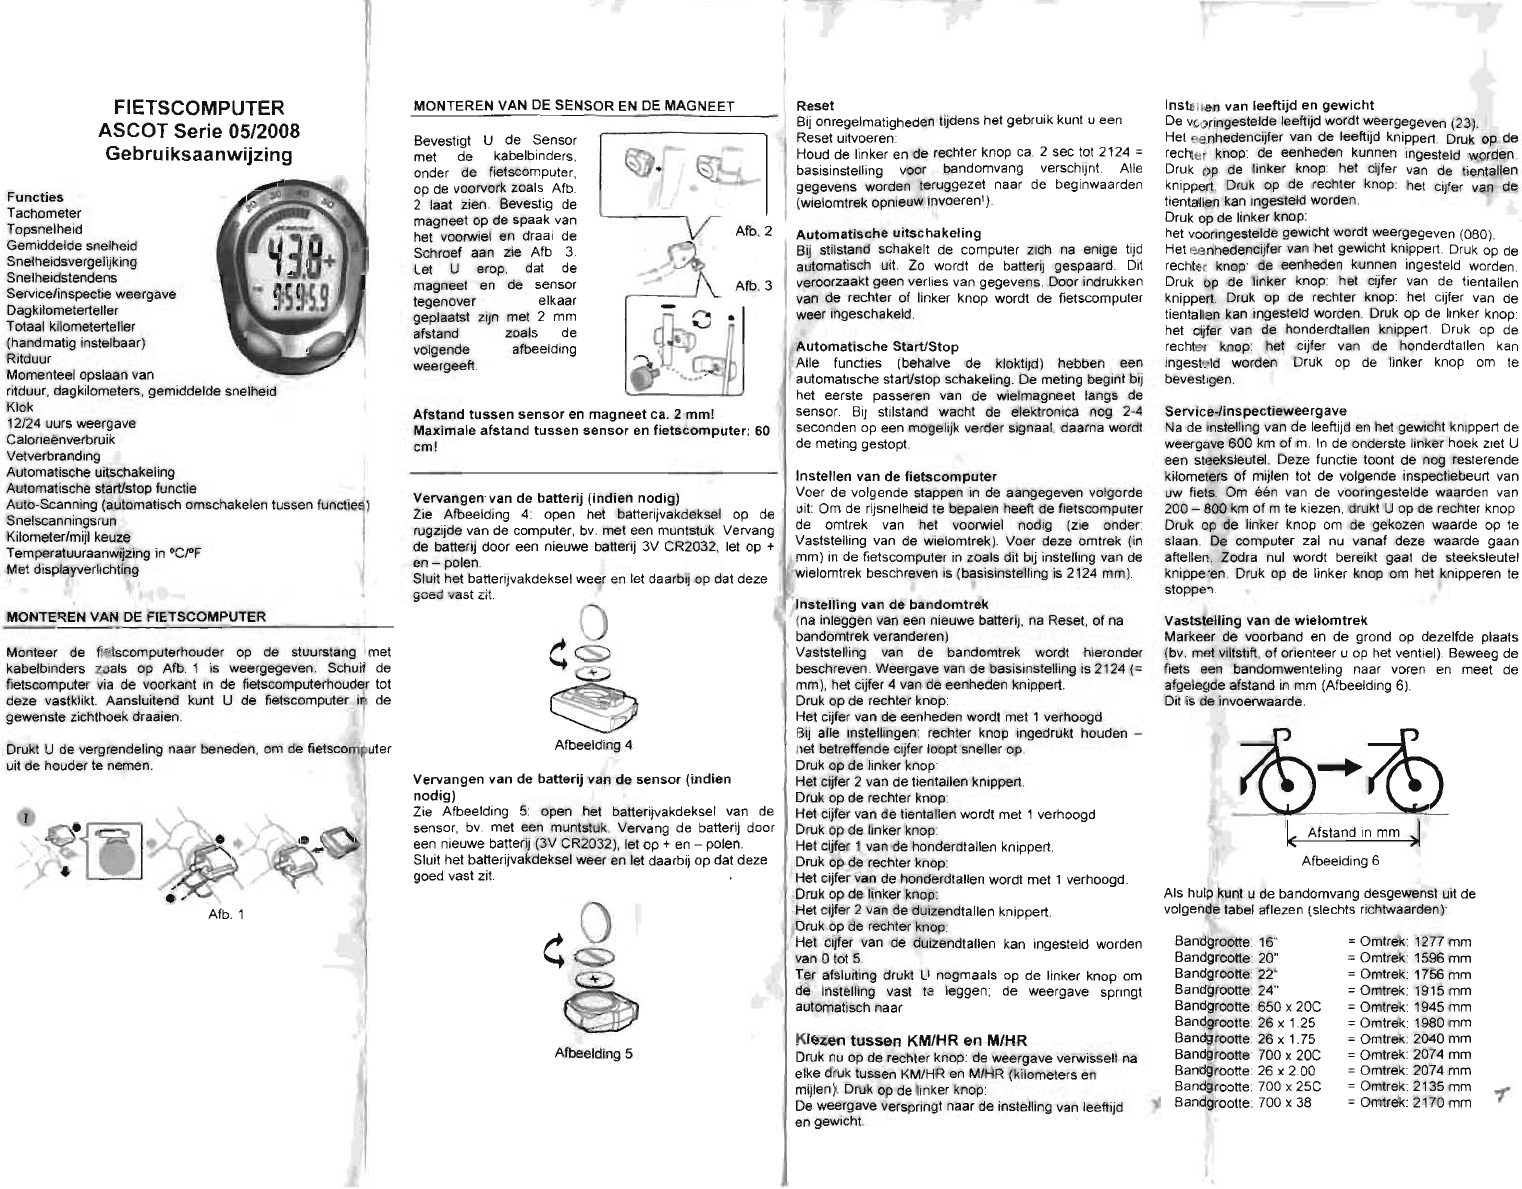 Dapperheid Thuisland Bewolkt Handleiding Ascot Aldi serie 05 - 2008 (pagina 1 van 2) (Nederlands)